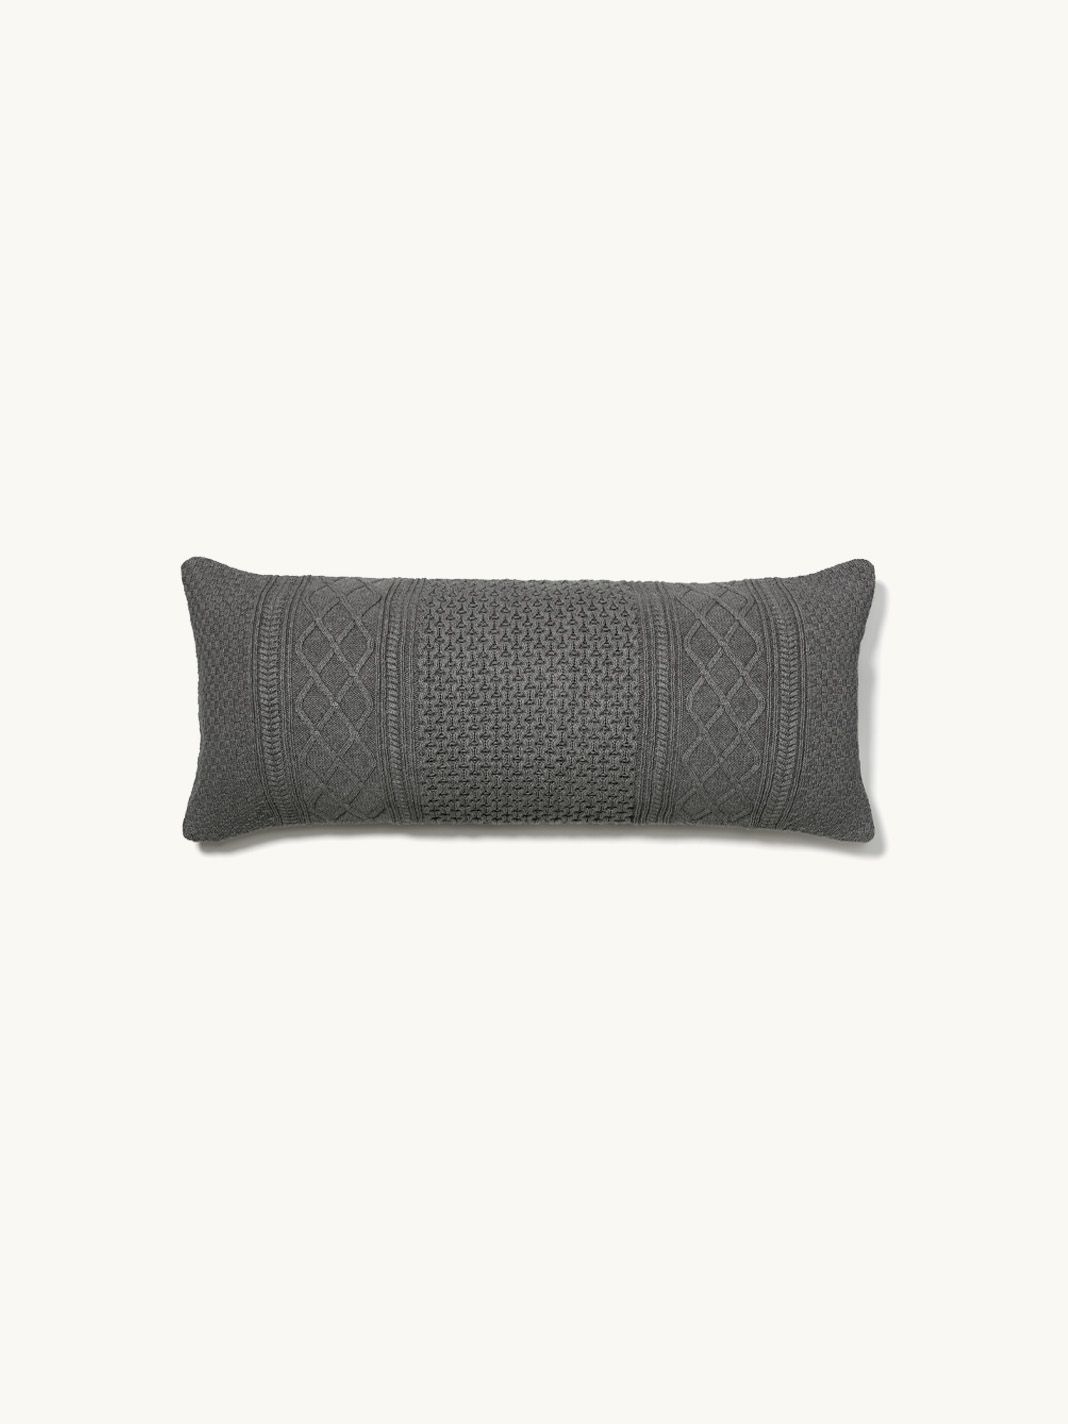 Aran Knit Pillow Cover | Boll & Branch